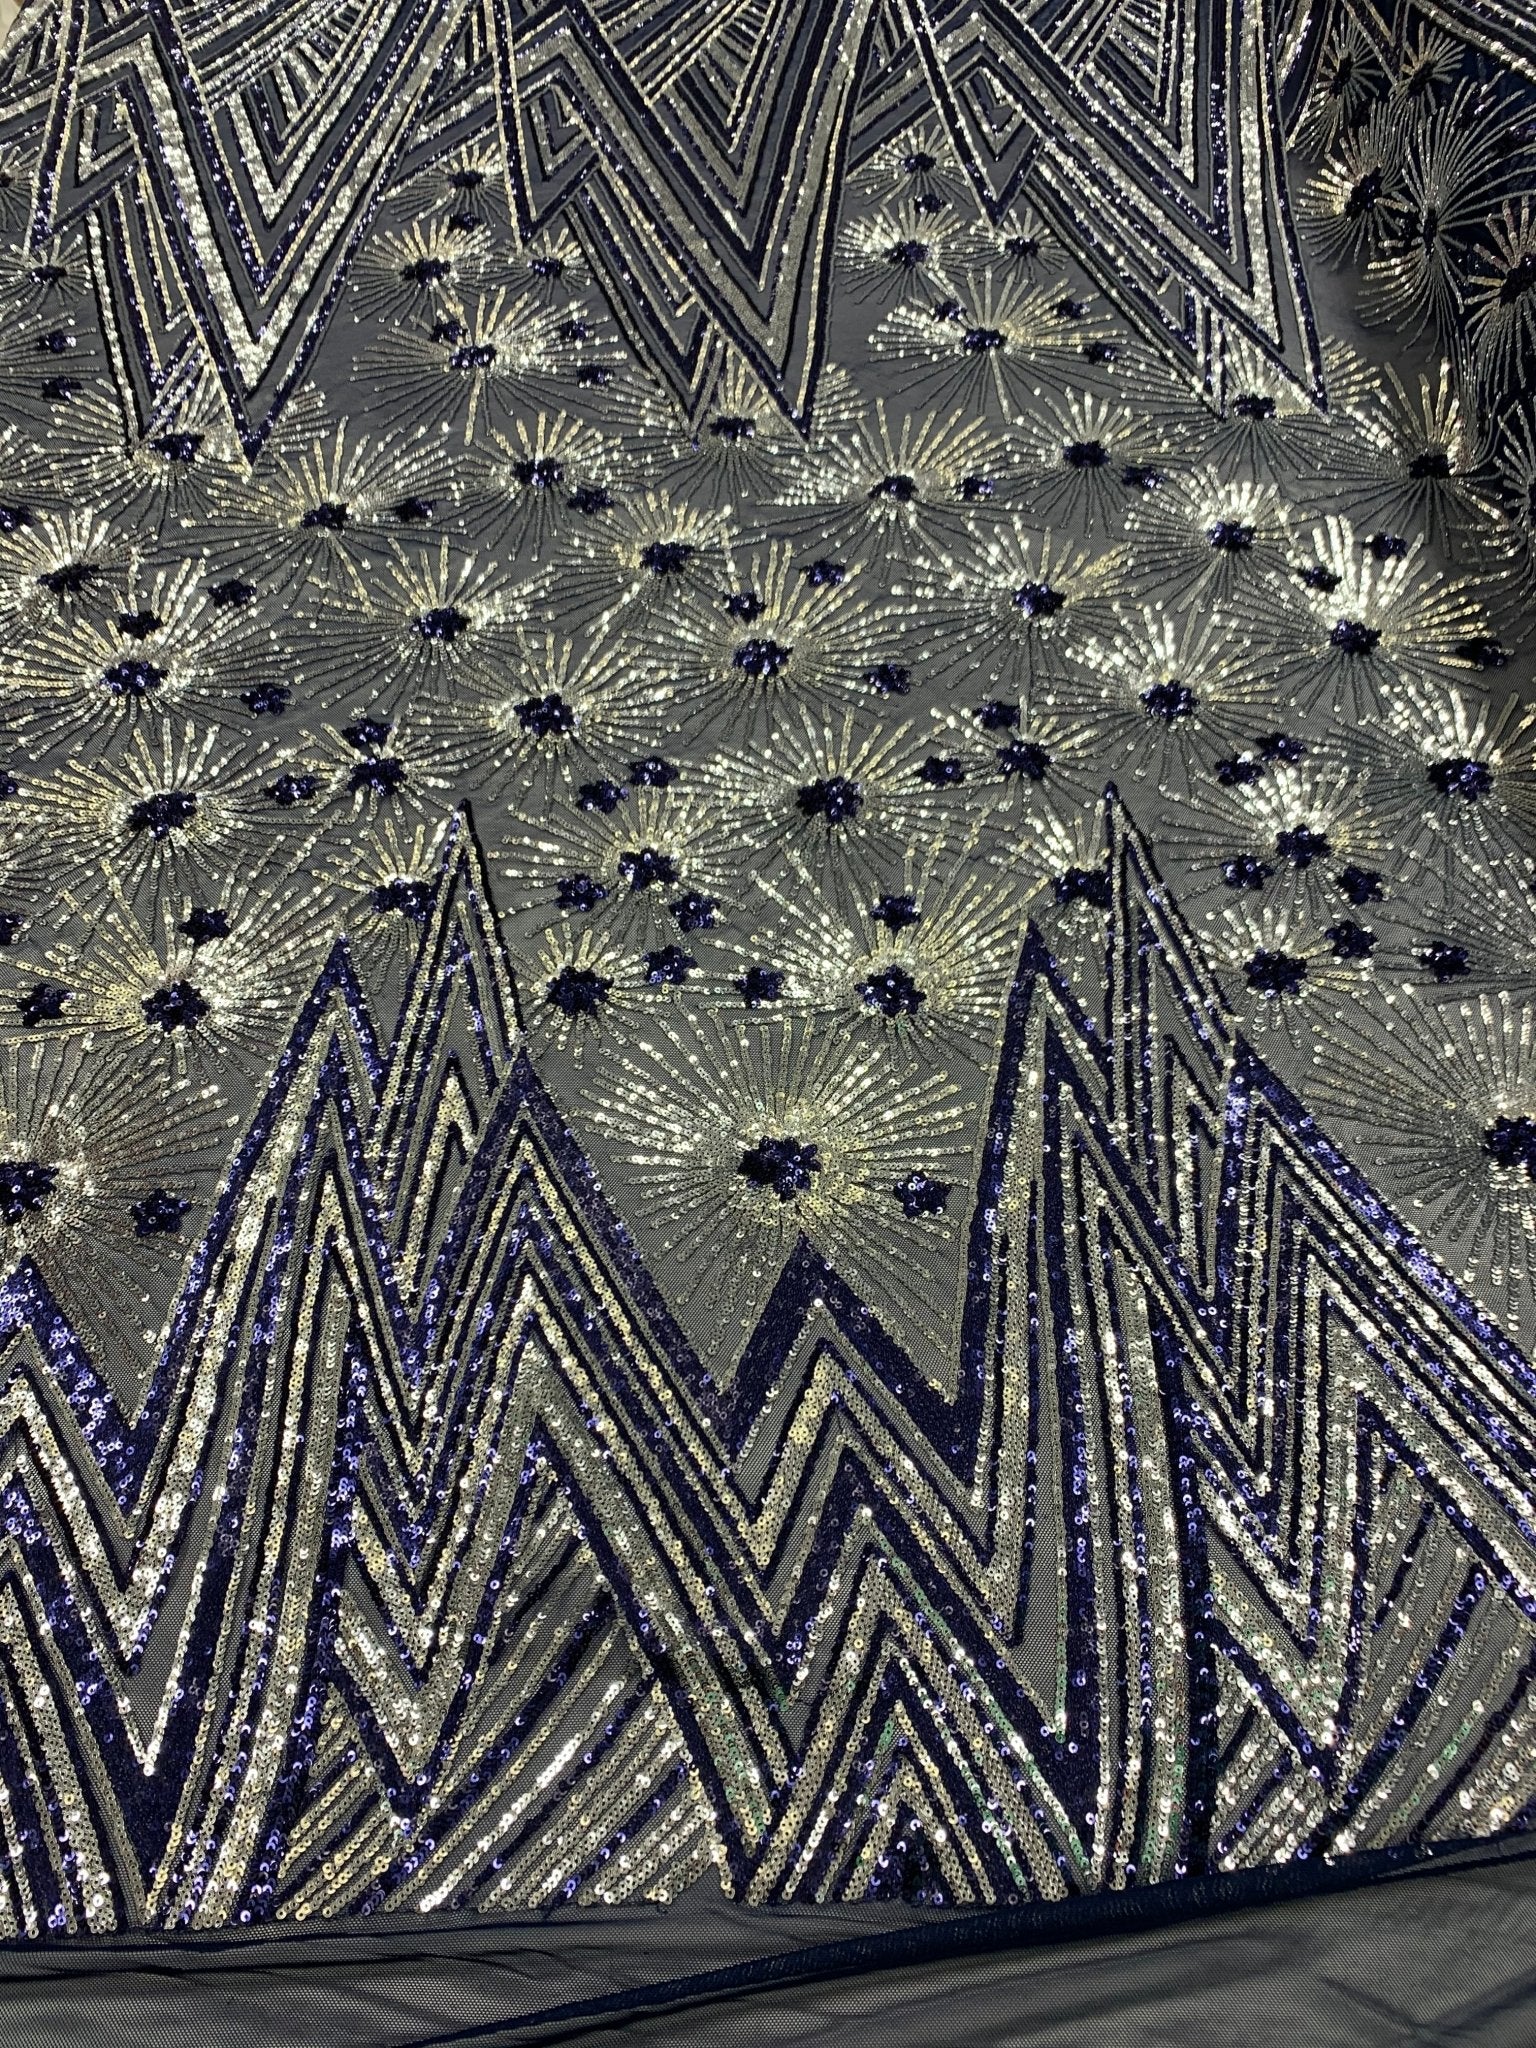 4 Way Stretch Iridescent Geometric Sequin Embroidered Mesh Lace FabricICEFABRICICE FABRICSNavy Blue IridescentBy The Yard (58" Wide)4 Way Stretch Iridescent Geometric Sequin Embroidered Mesh Lace Fabric ICEFABRIC |Navy Blue Iridescent